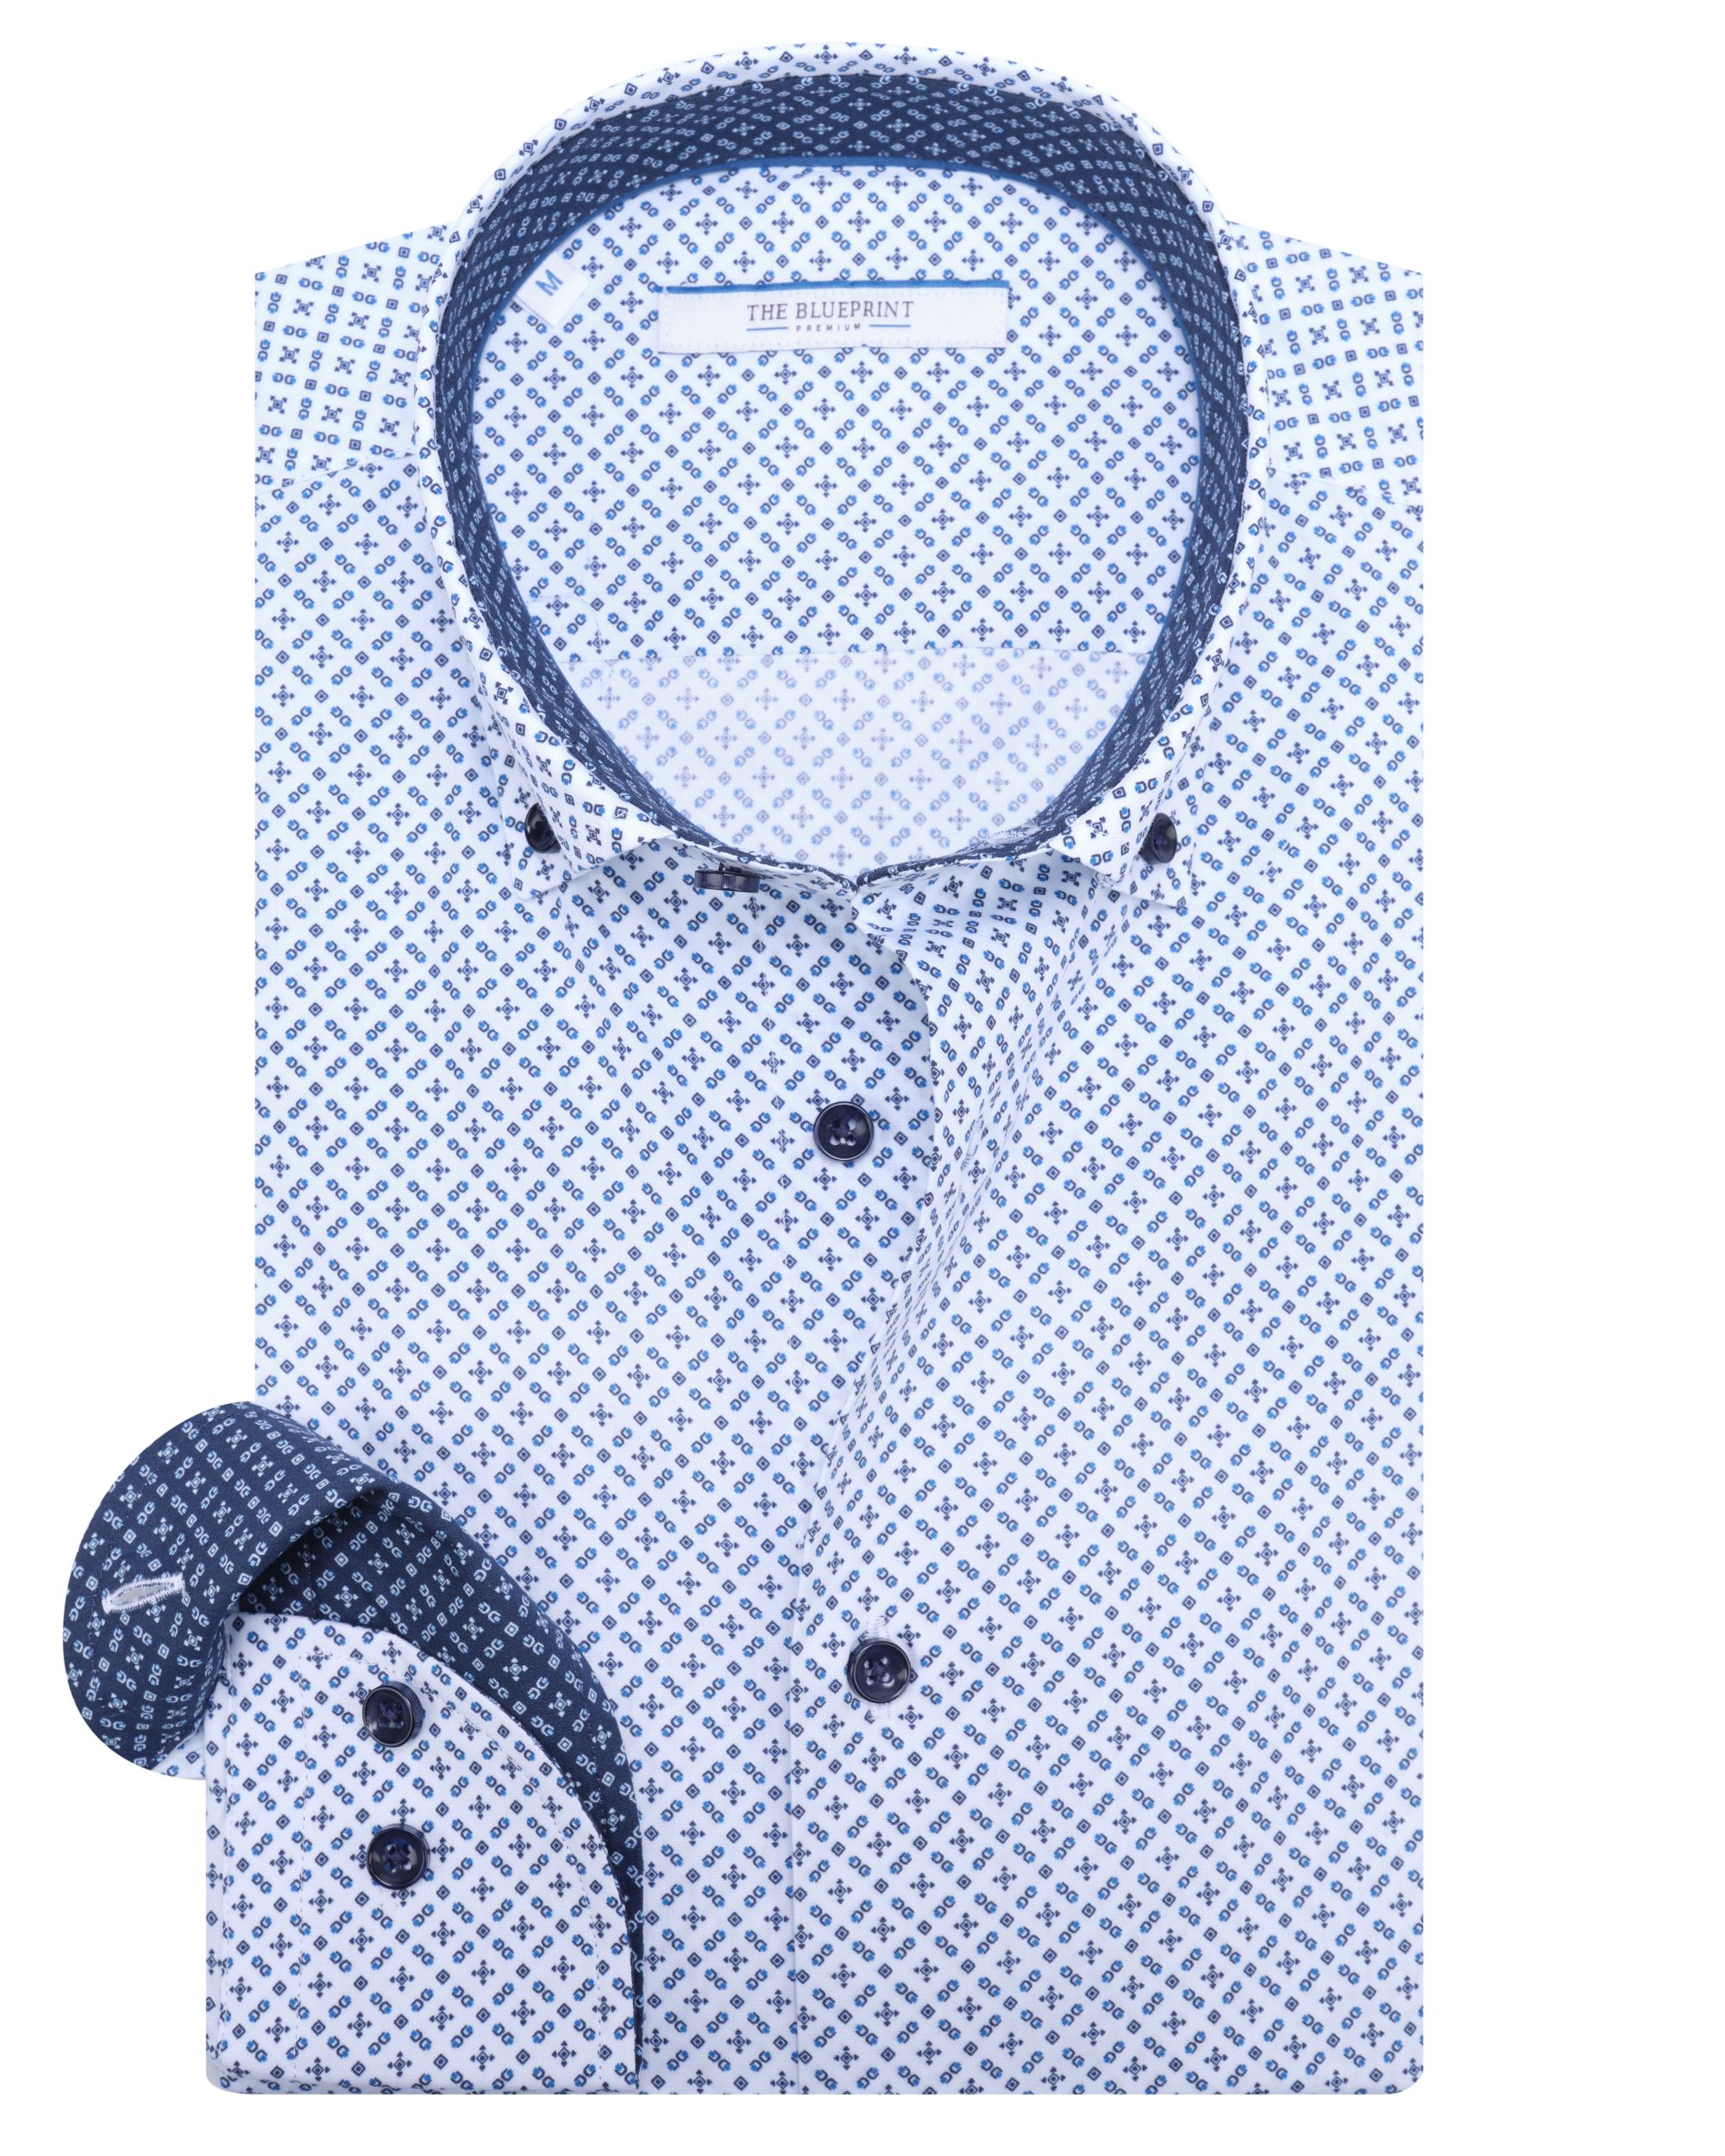 The BLUEPRINT Premium Casual Overhemd LM Navy print 082236-001-L